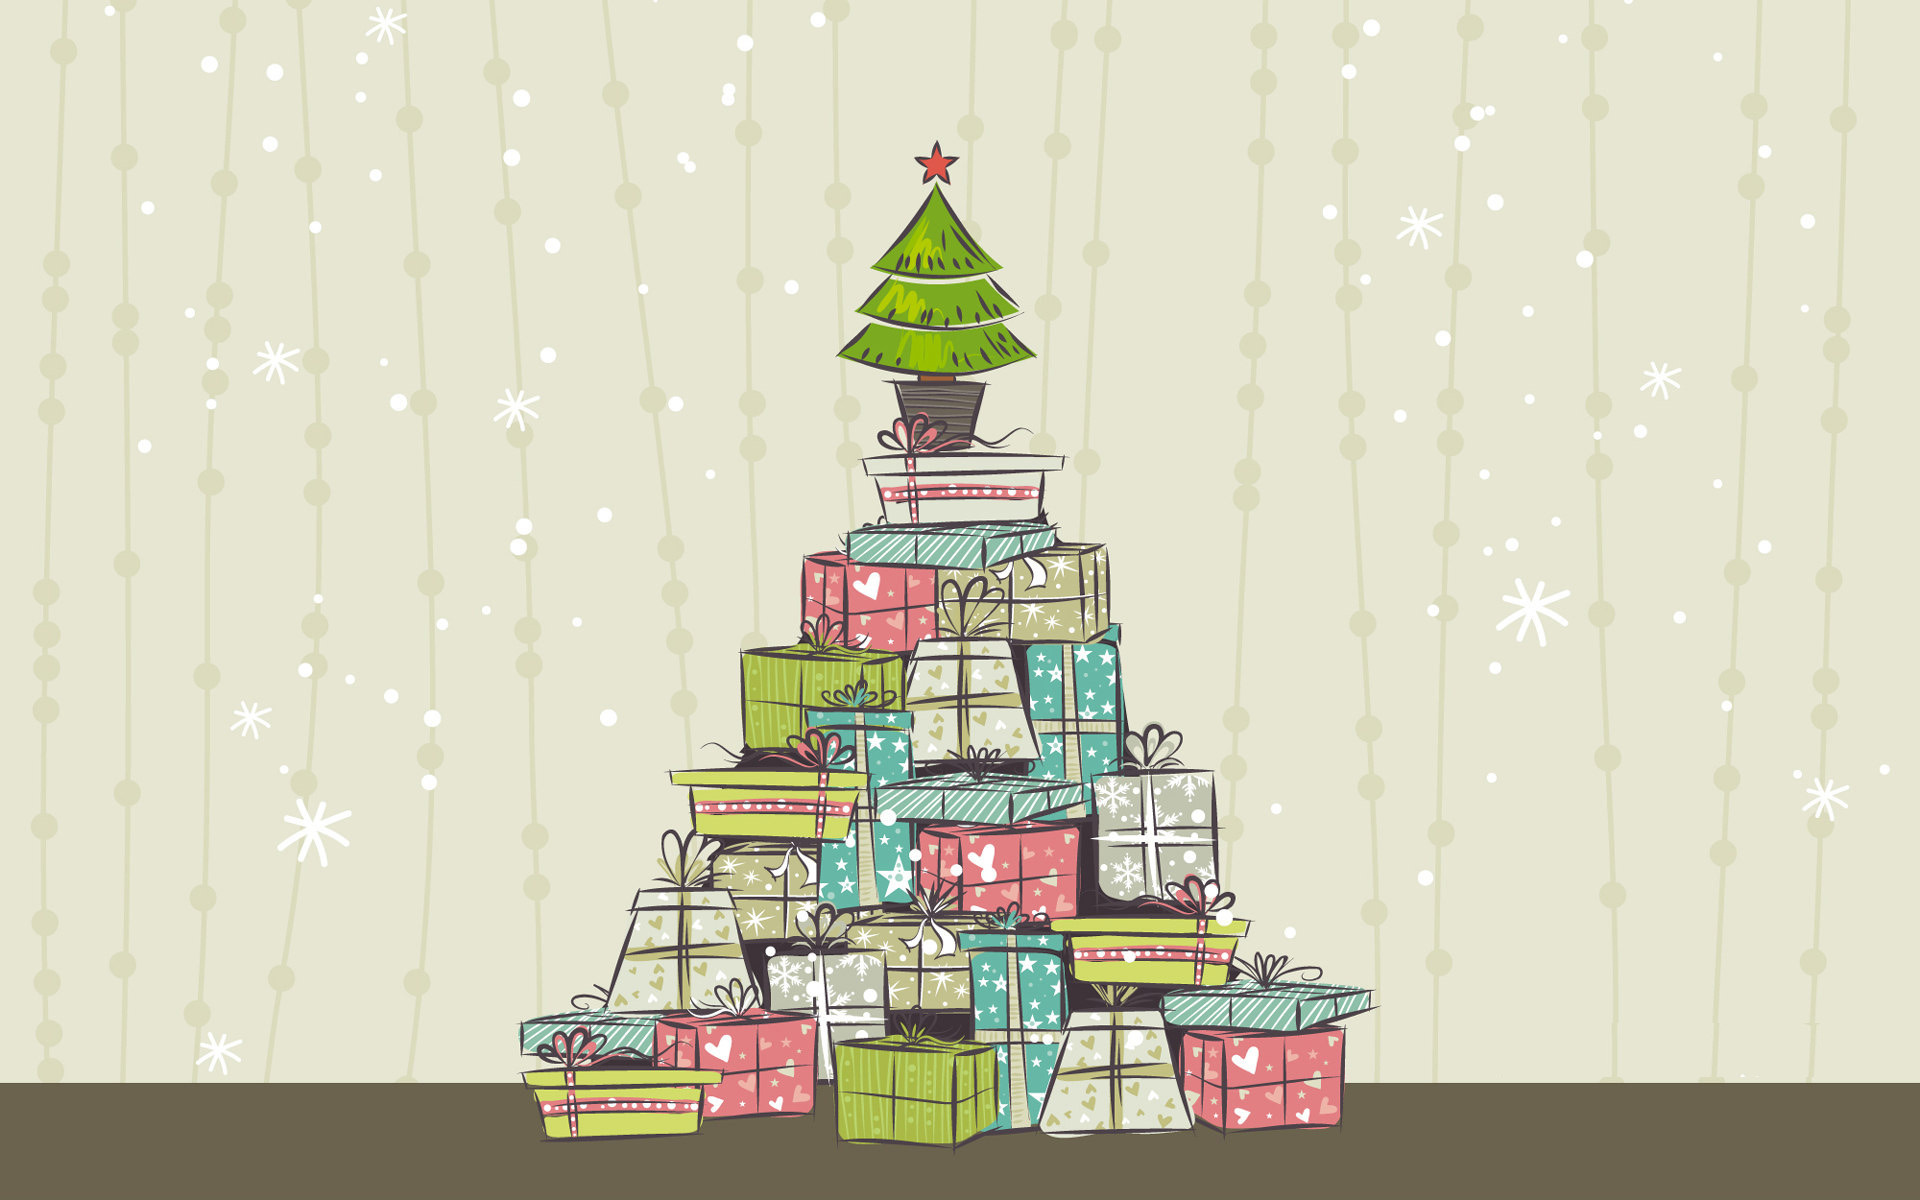 holidays, Christmastide, Seasonal, Festive Wallpapers HD / Desktop and